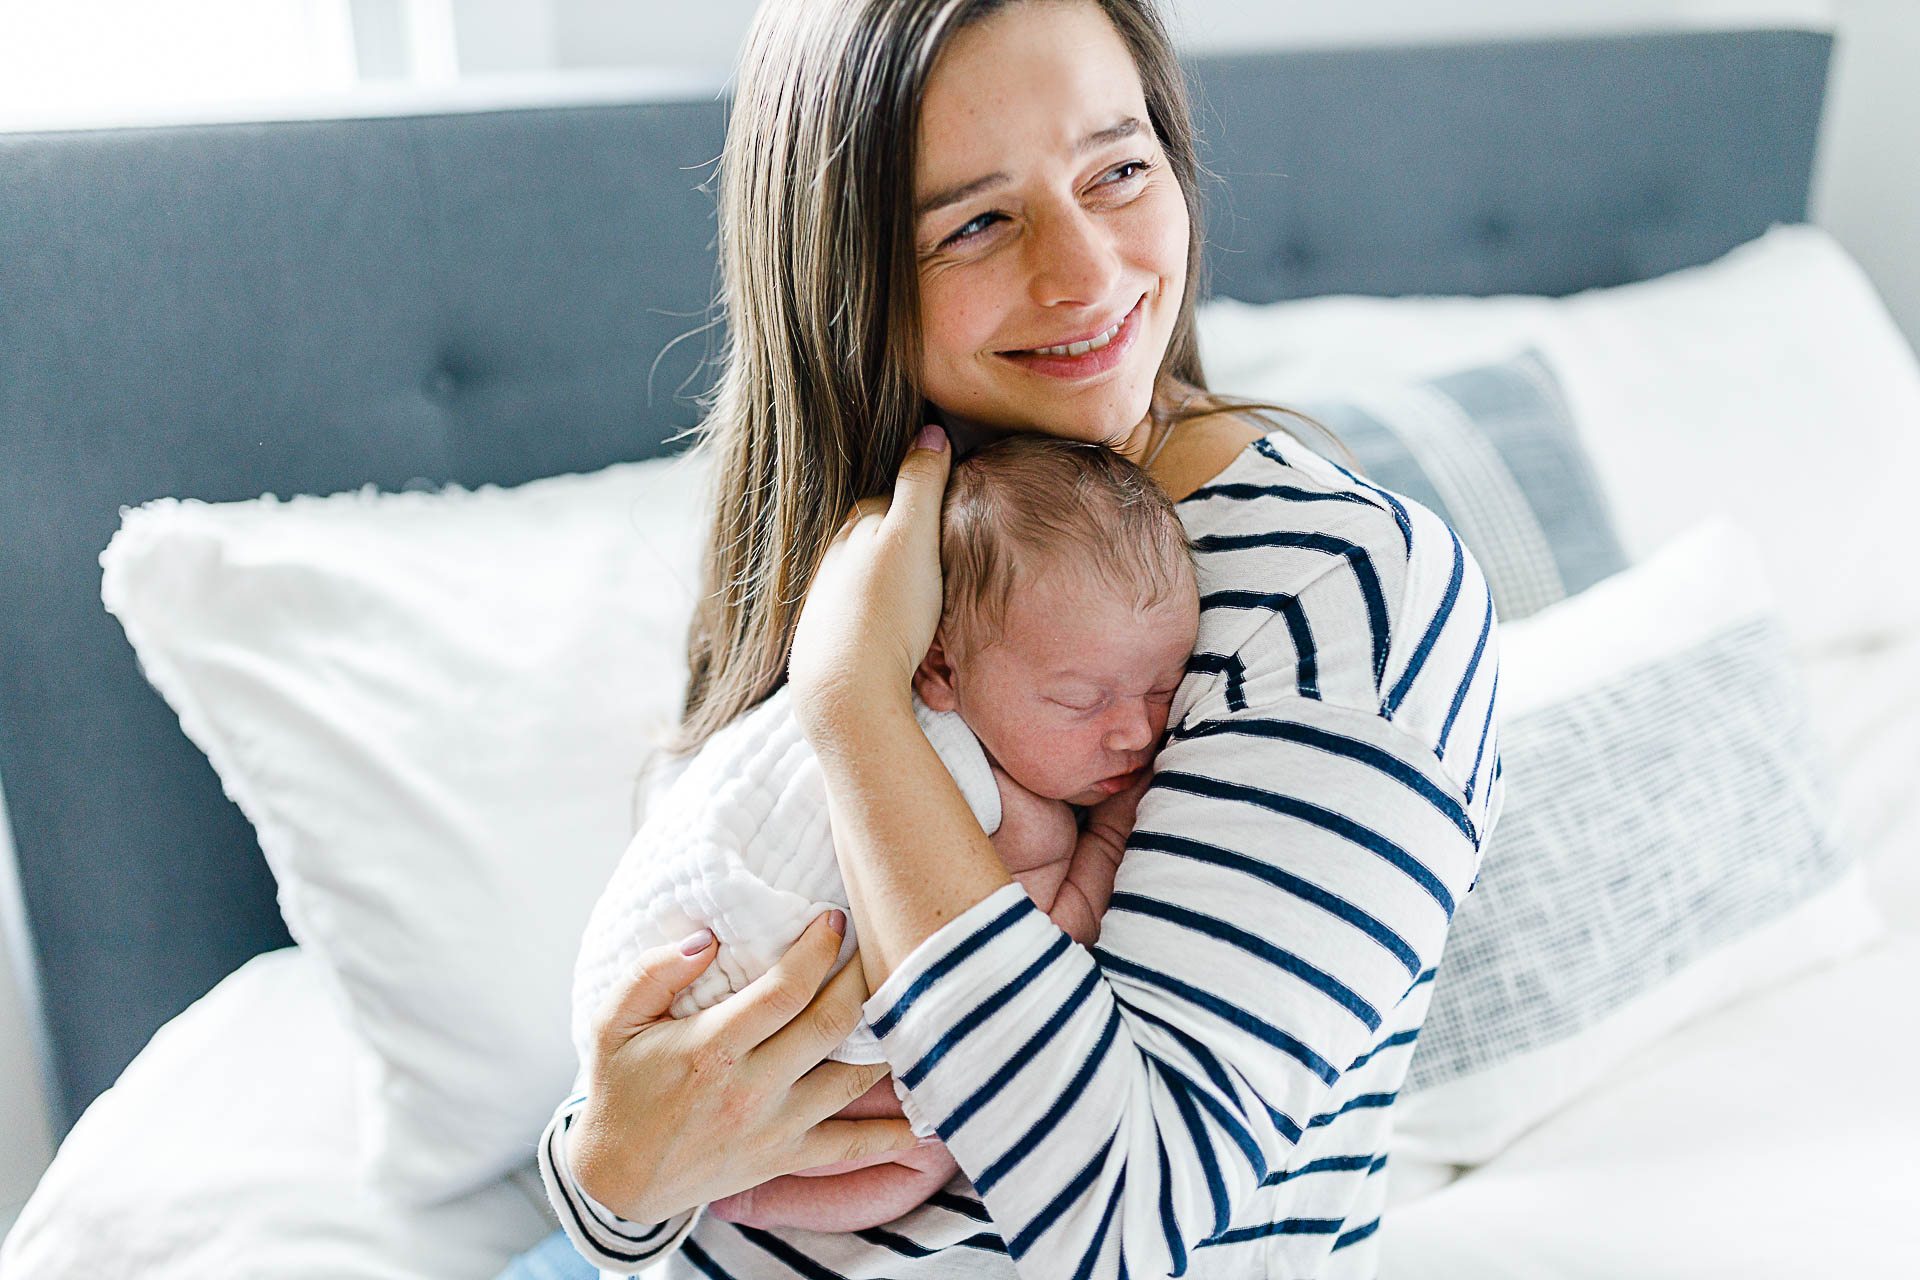 Photo by Scituate newborn photographer Christina Runnals| Mom smiling with newborn boy